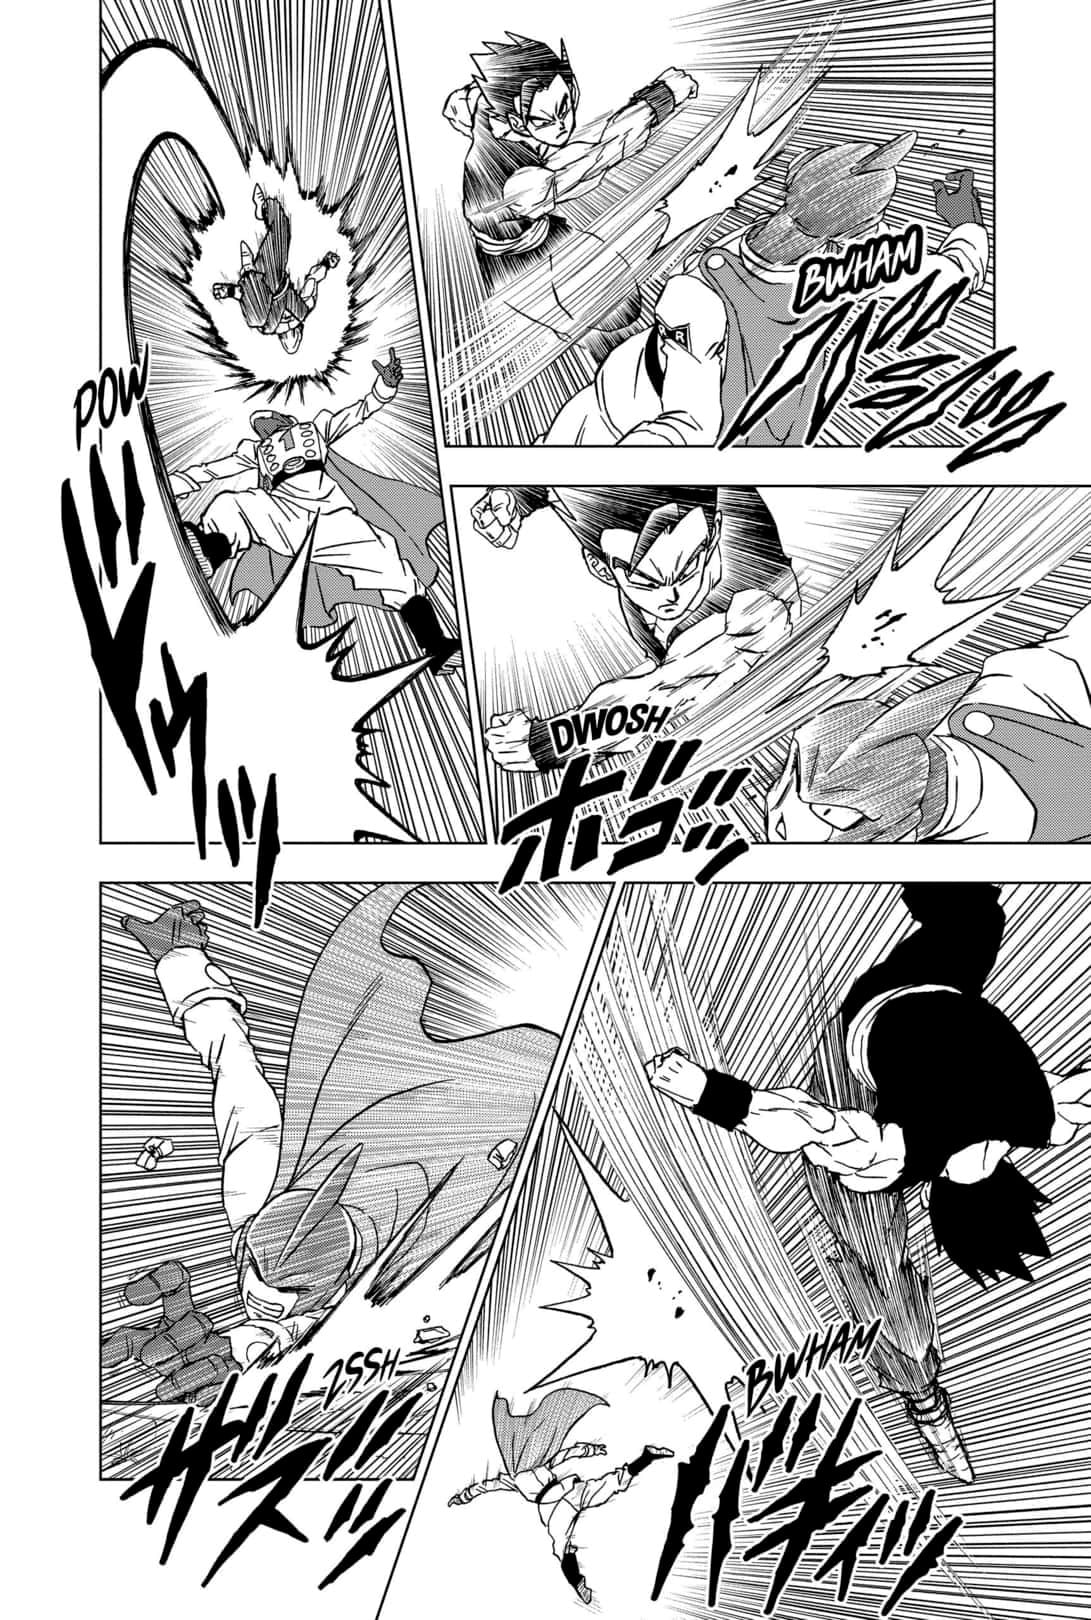 Dragon Ball Super: el capítulo 95 del manga ya tiene fecha de